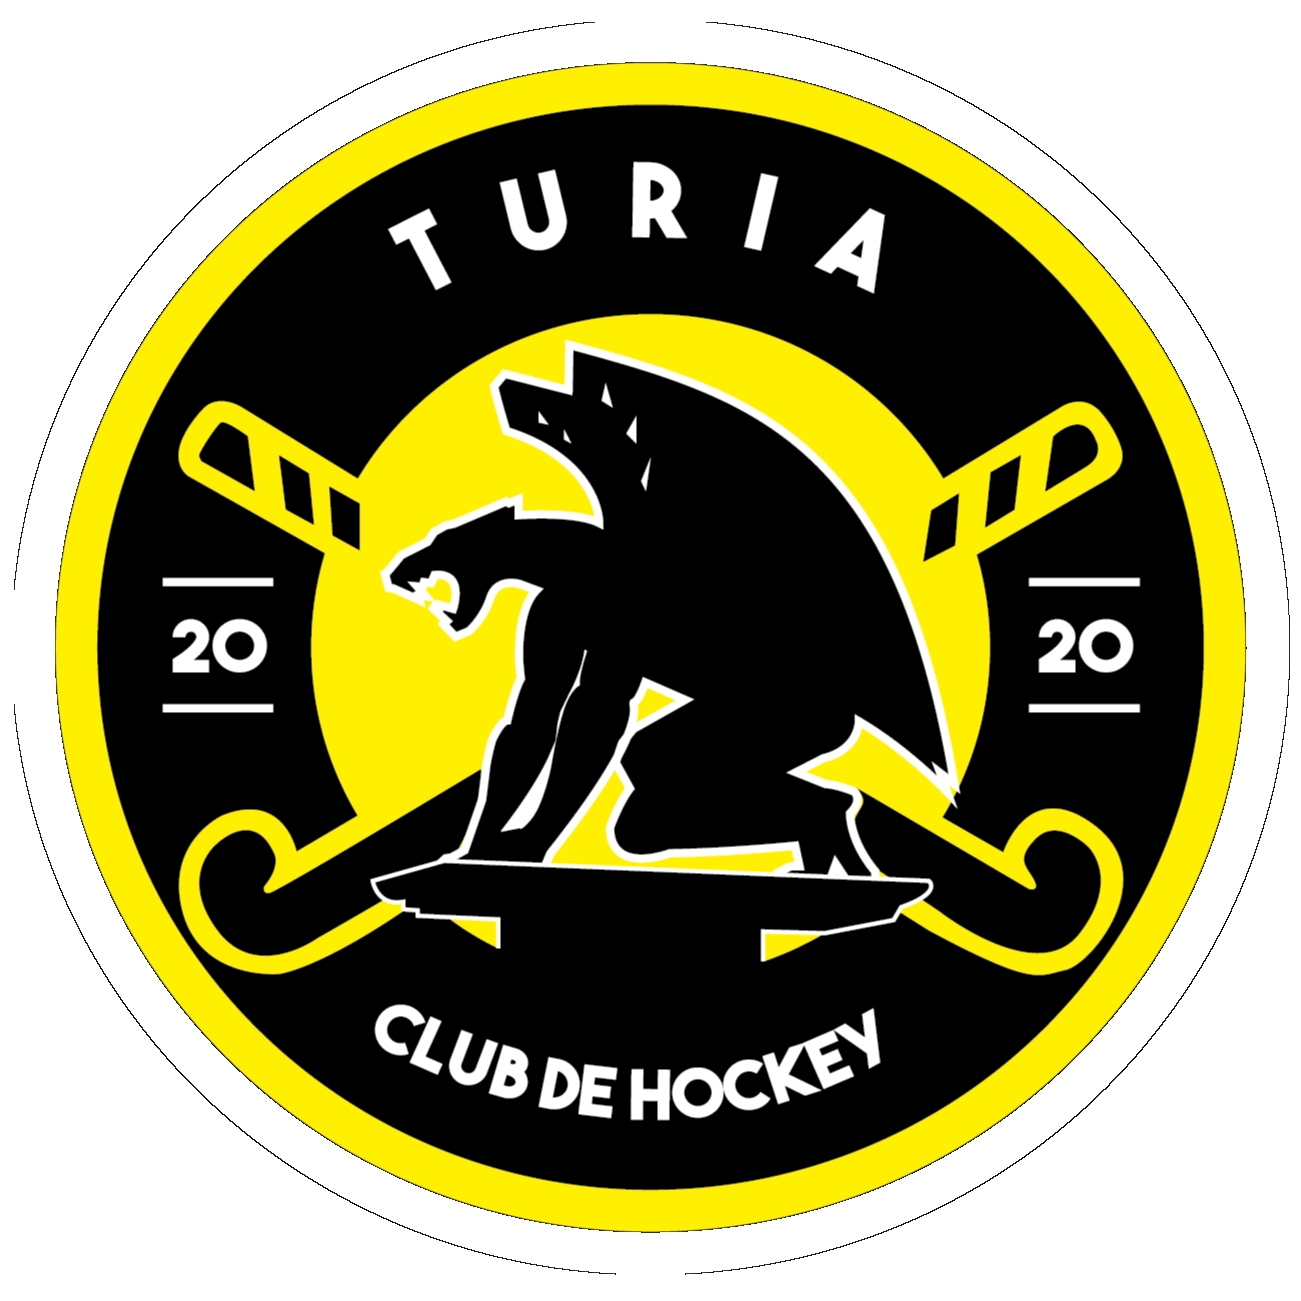 TURIA CLUB DE HOCKEY